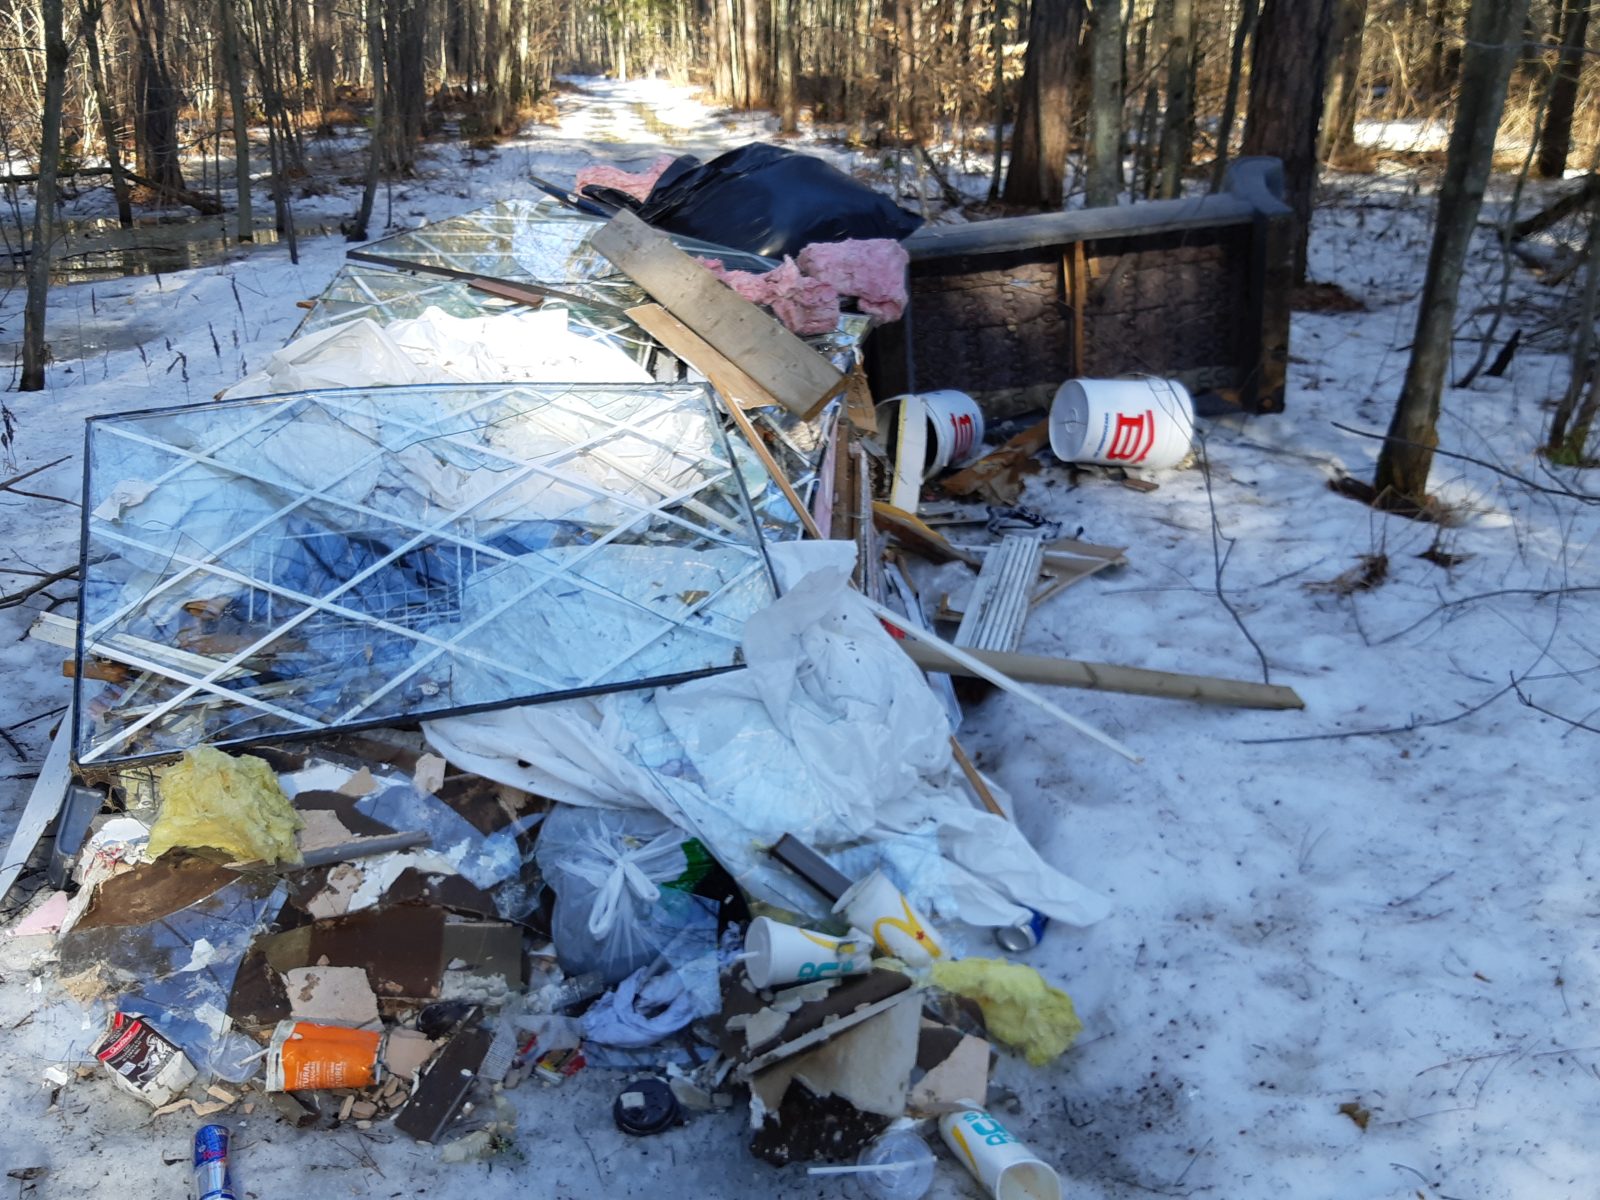 Illegal trash dump in Larose Forest